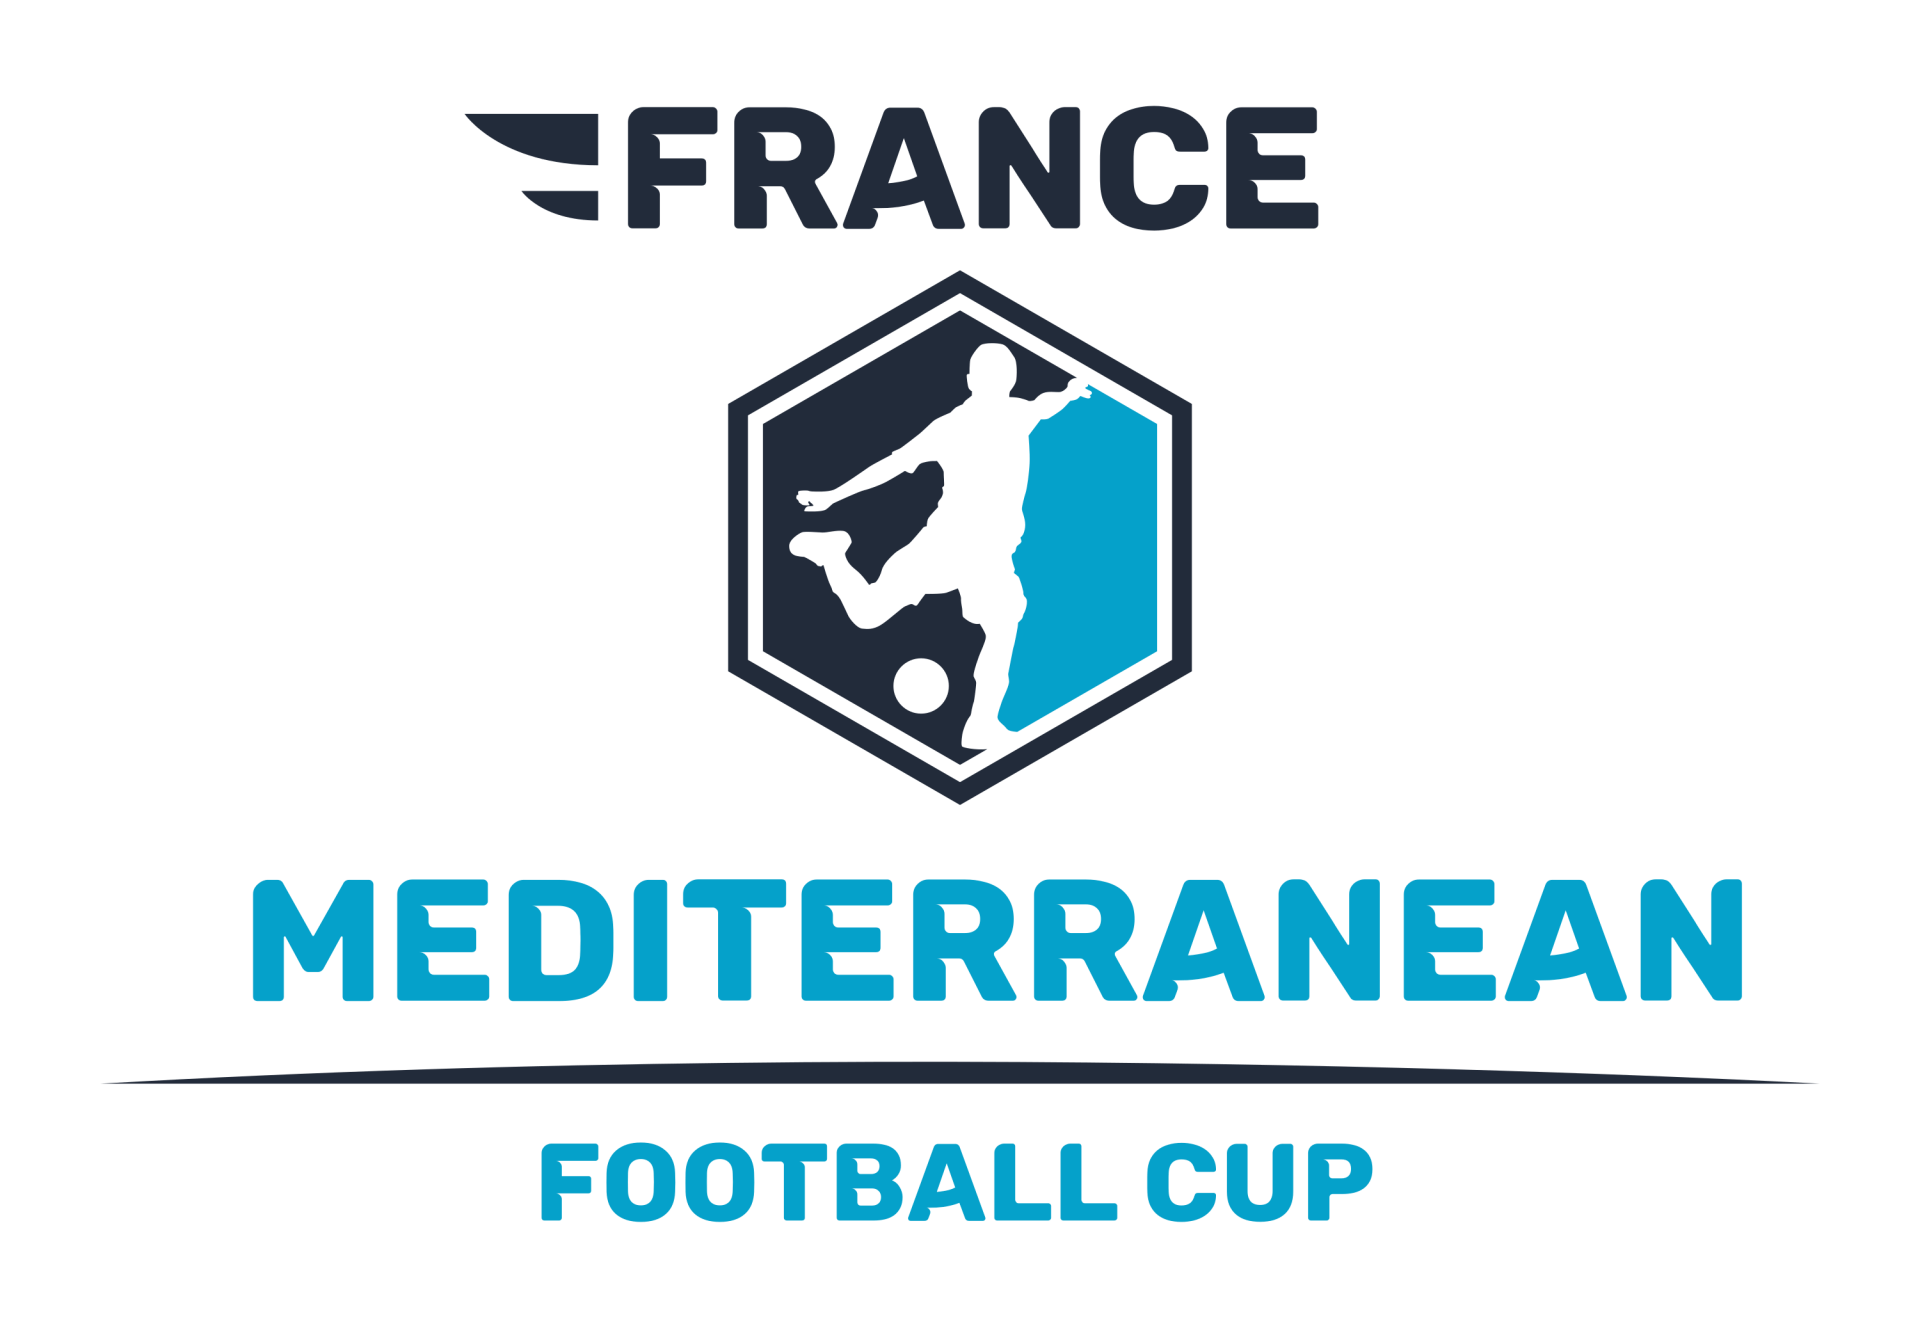 France Tournament Football